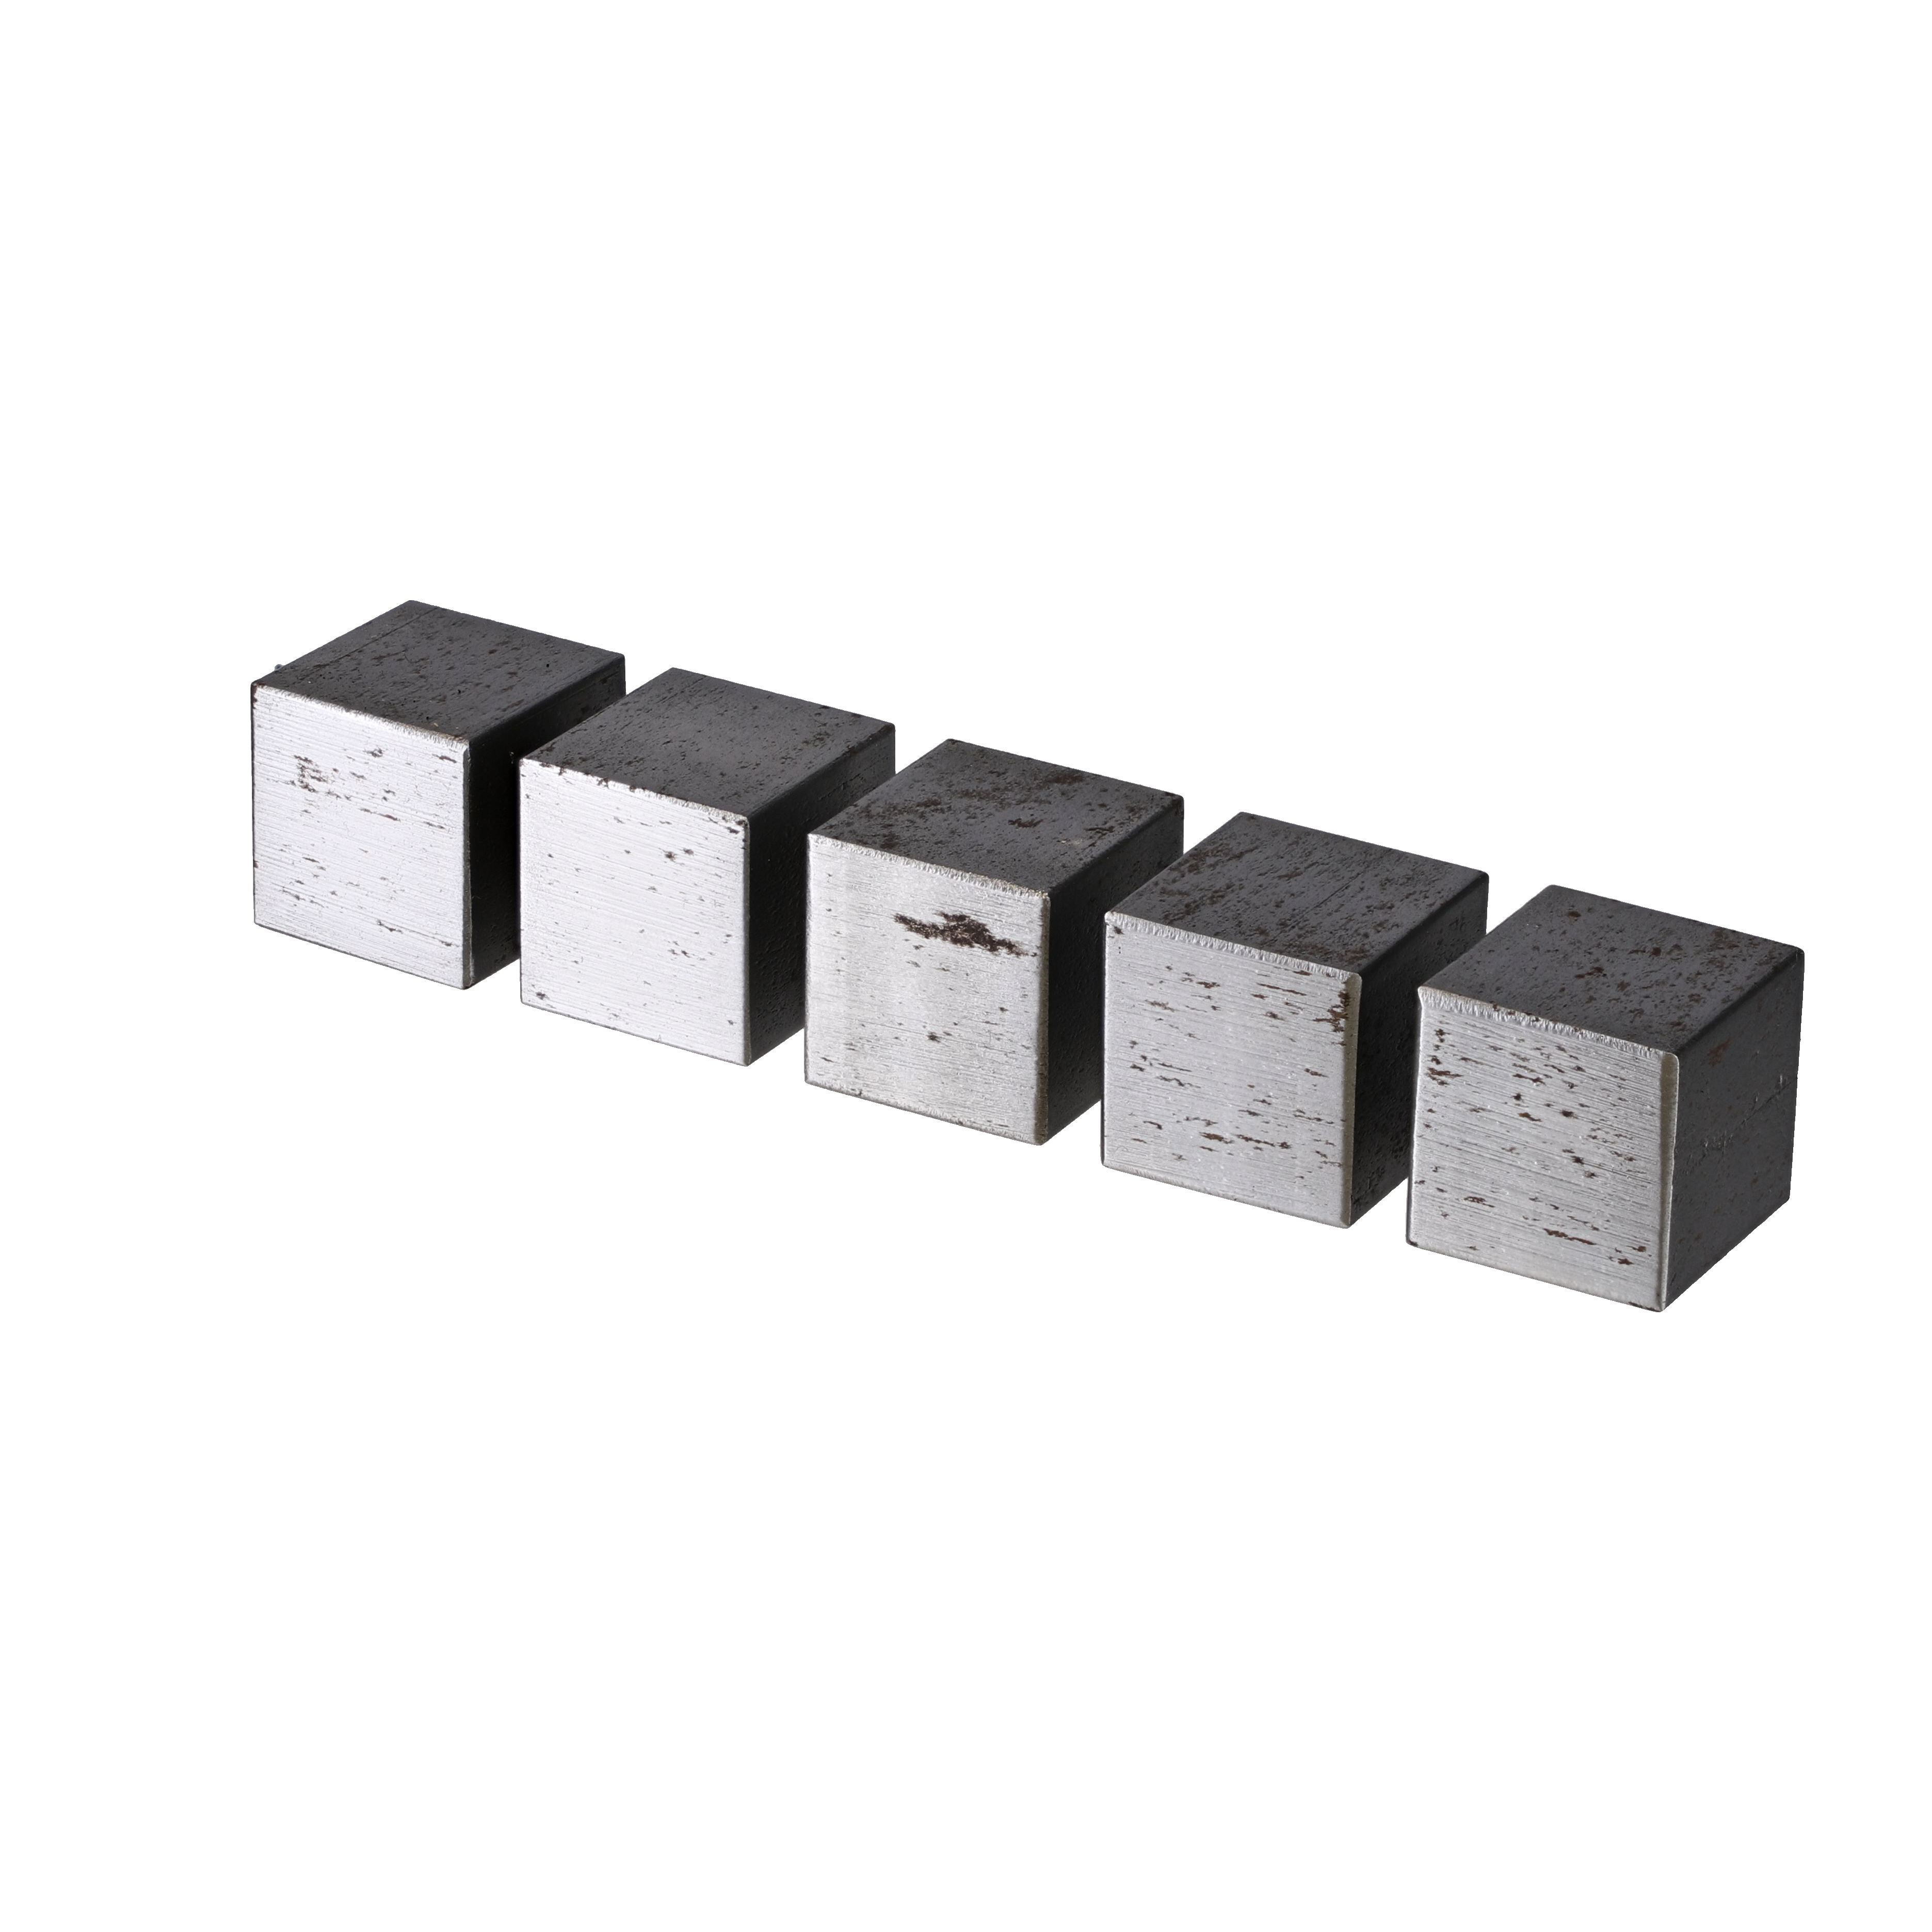 Cubes For Density Invest. Steel